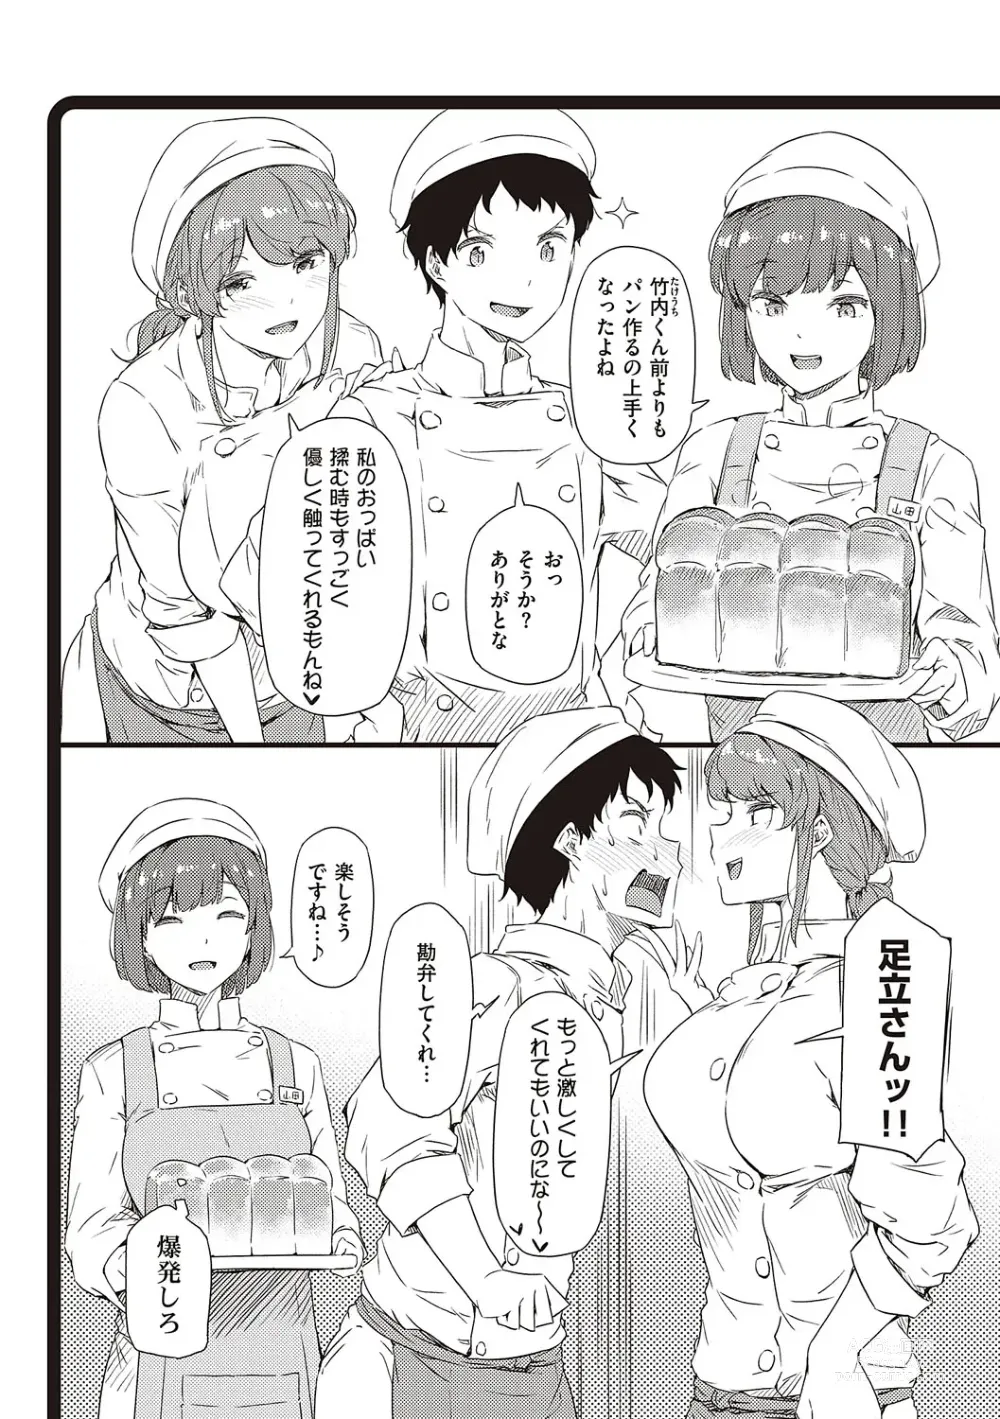 Page 217 of manga Shiranai Koto Shiritai no? - Dont you wanna learn something new?